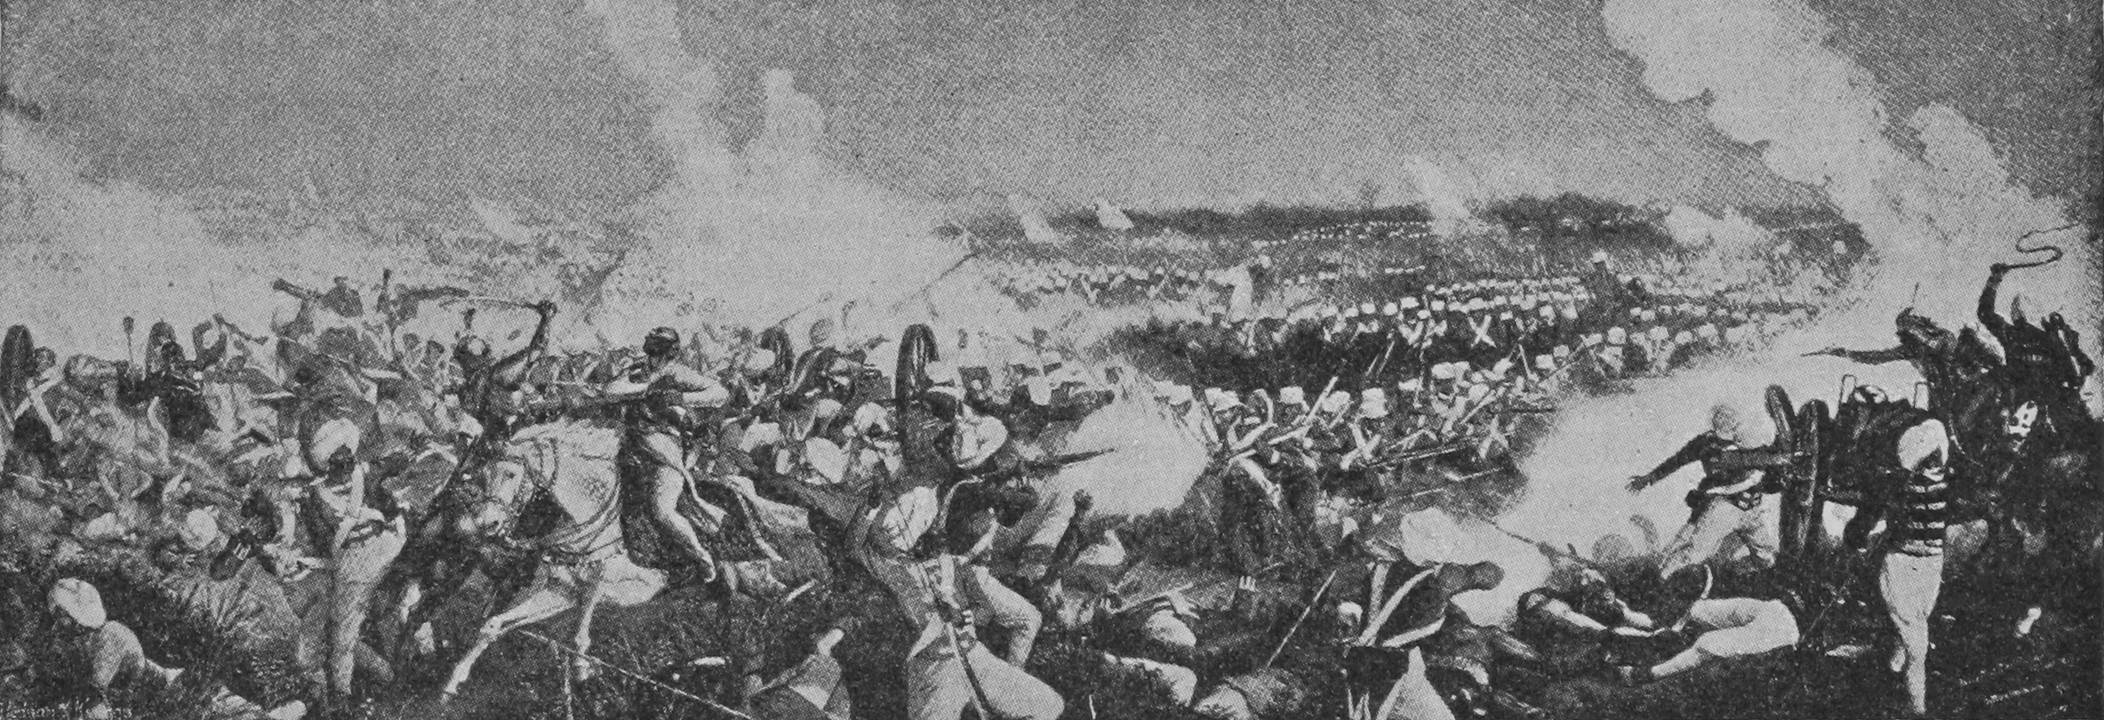 Сраженіе при Чиліанвала 1849 г. Атака 61-го пѣх. англ. полка (Сейкская война въ Индіи).